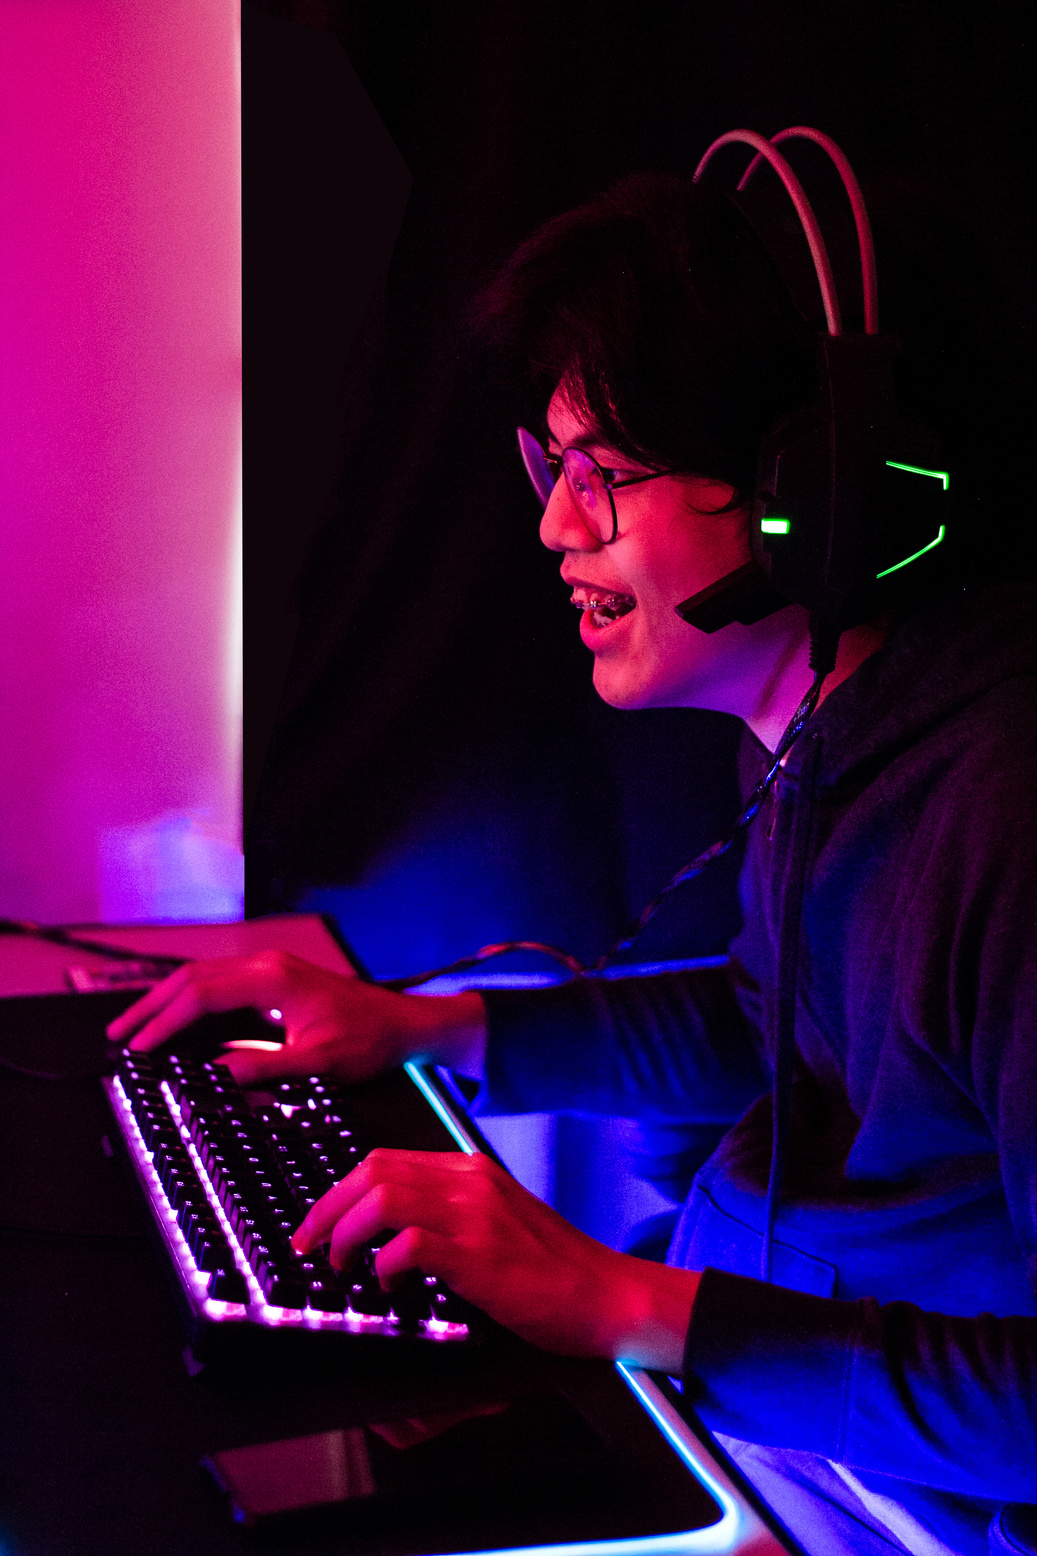 Smiling Man with Eyeglasses Playing Computer Game